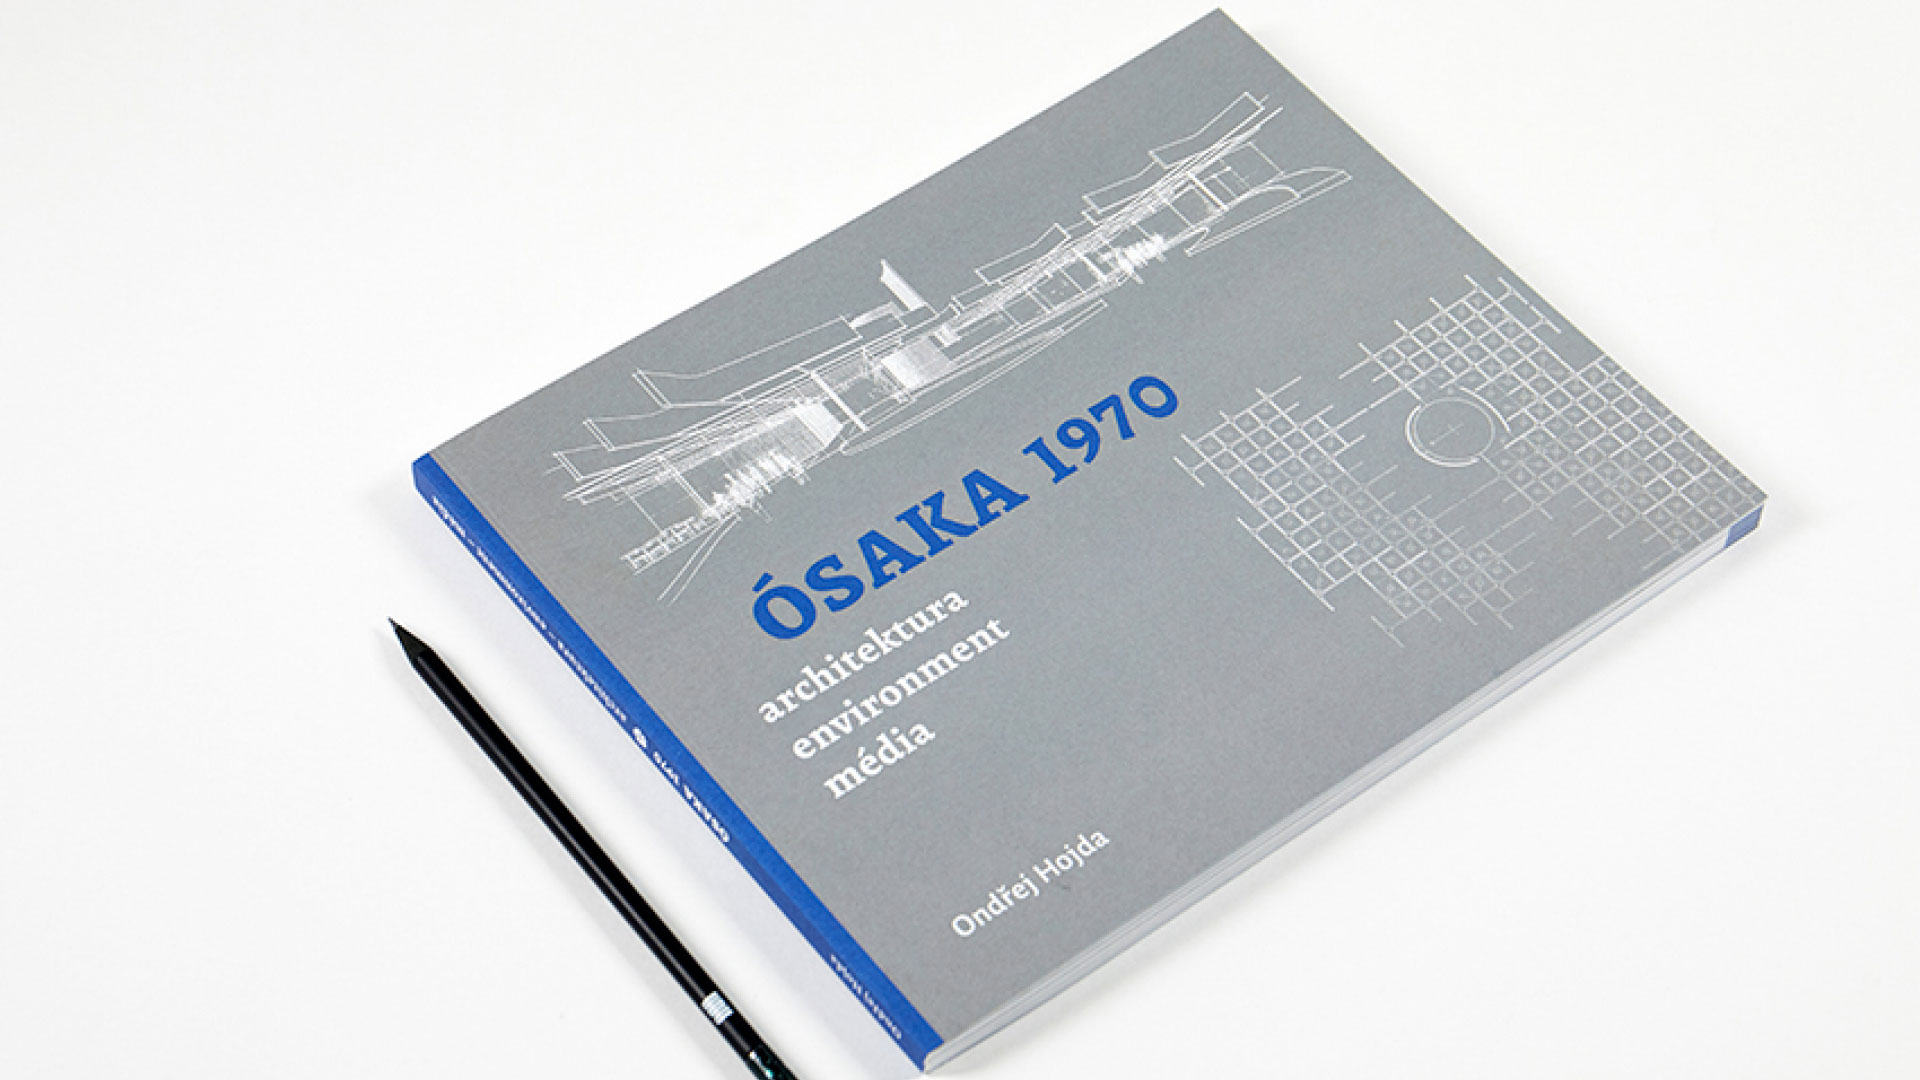 Ósaka 1970: Architecture, Environment and Media